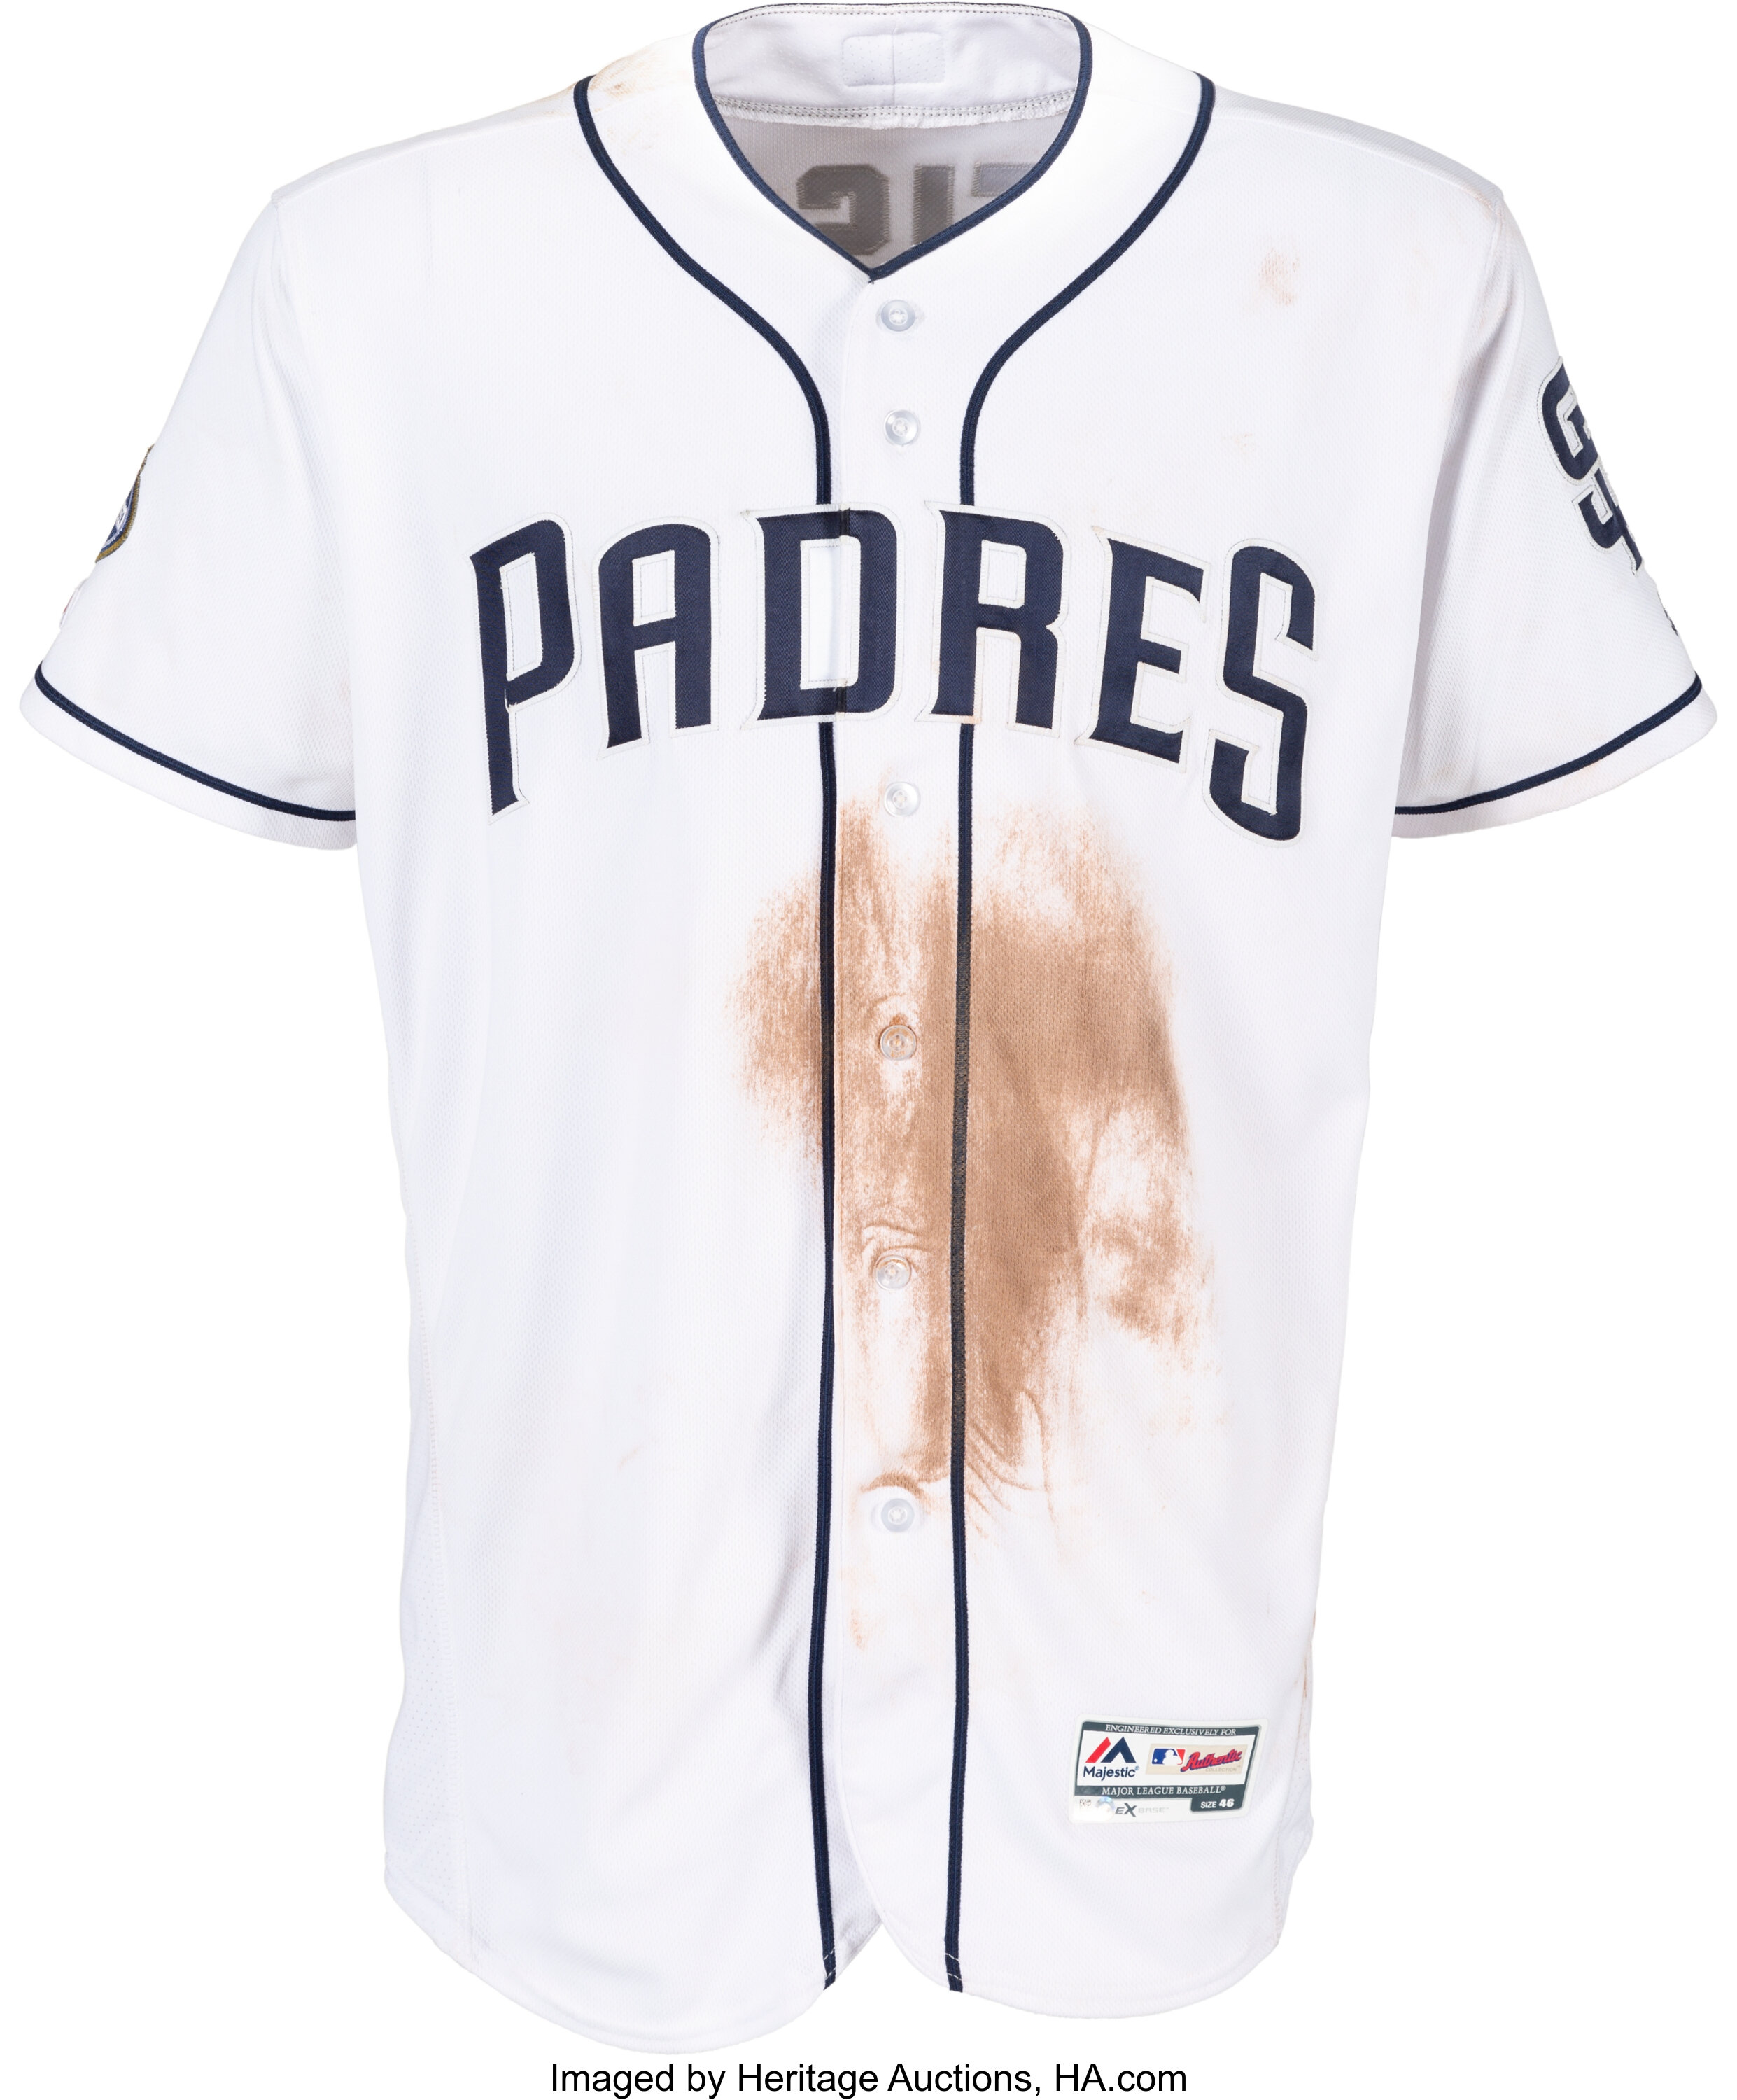 Fernando Tatis Jr. Authentic Team-Issued San Diego Padres Road